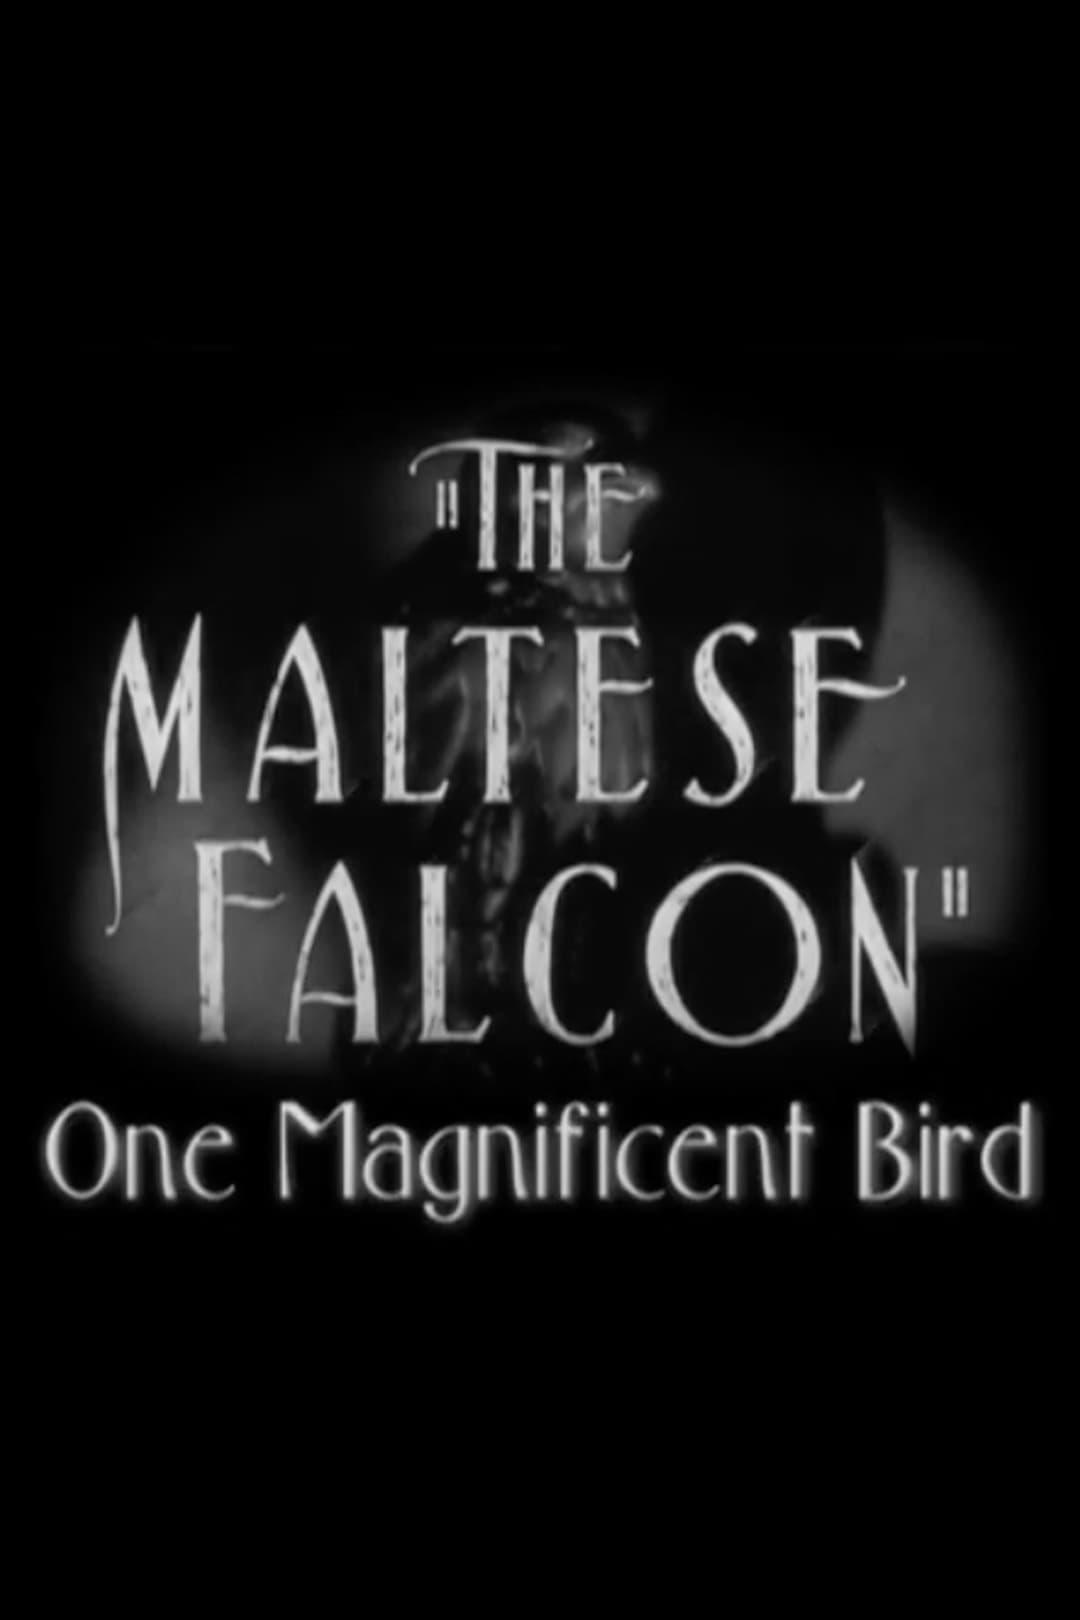 The Maltese Falcon: One Magnificent Bird poster